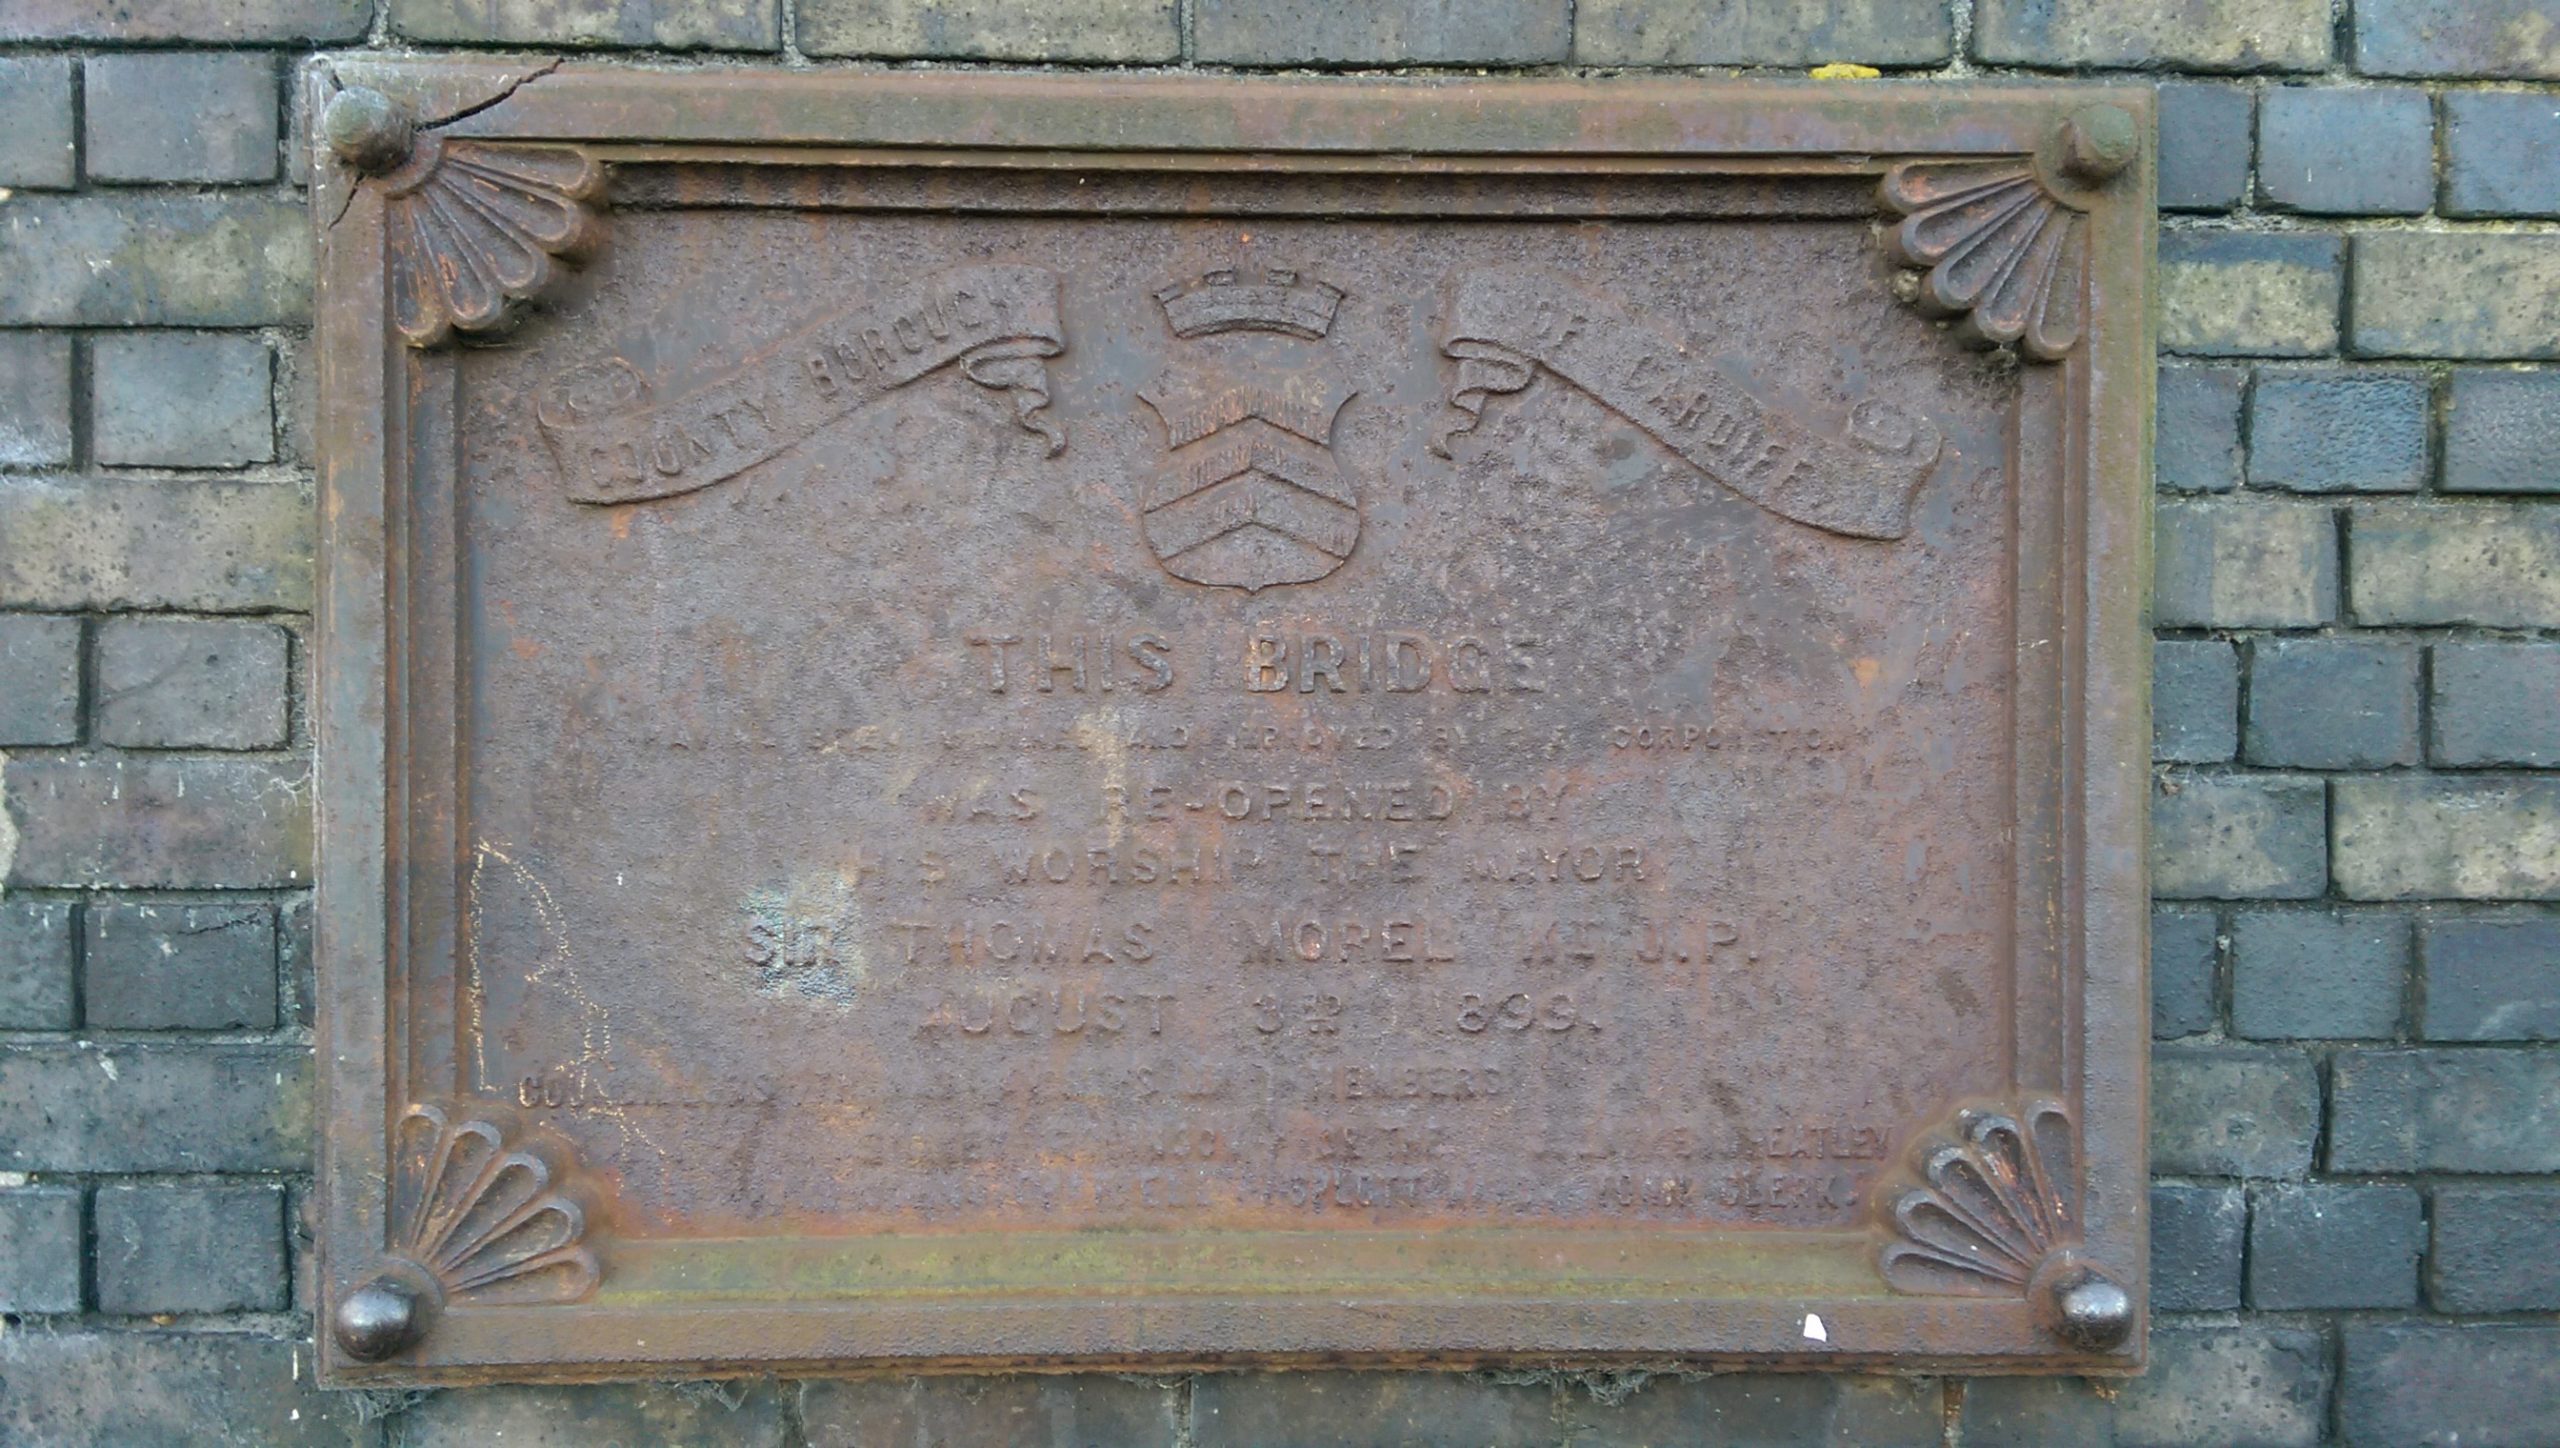 SRB plaque